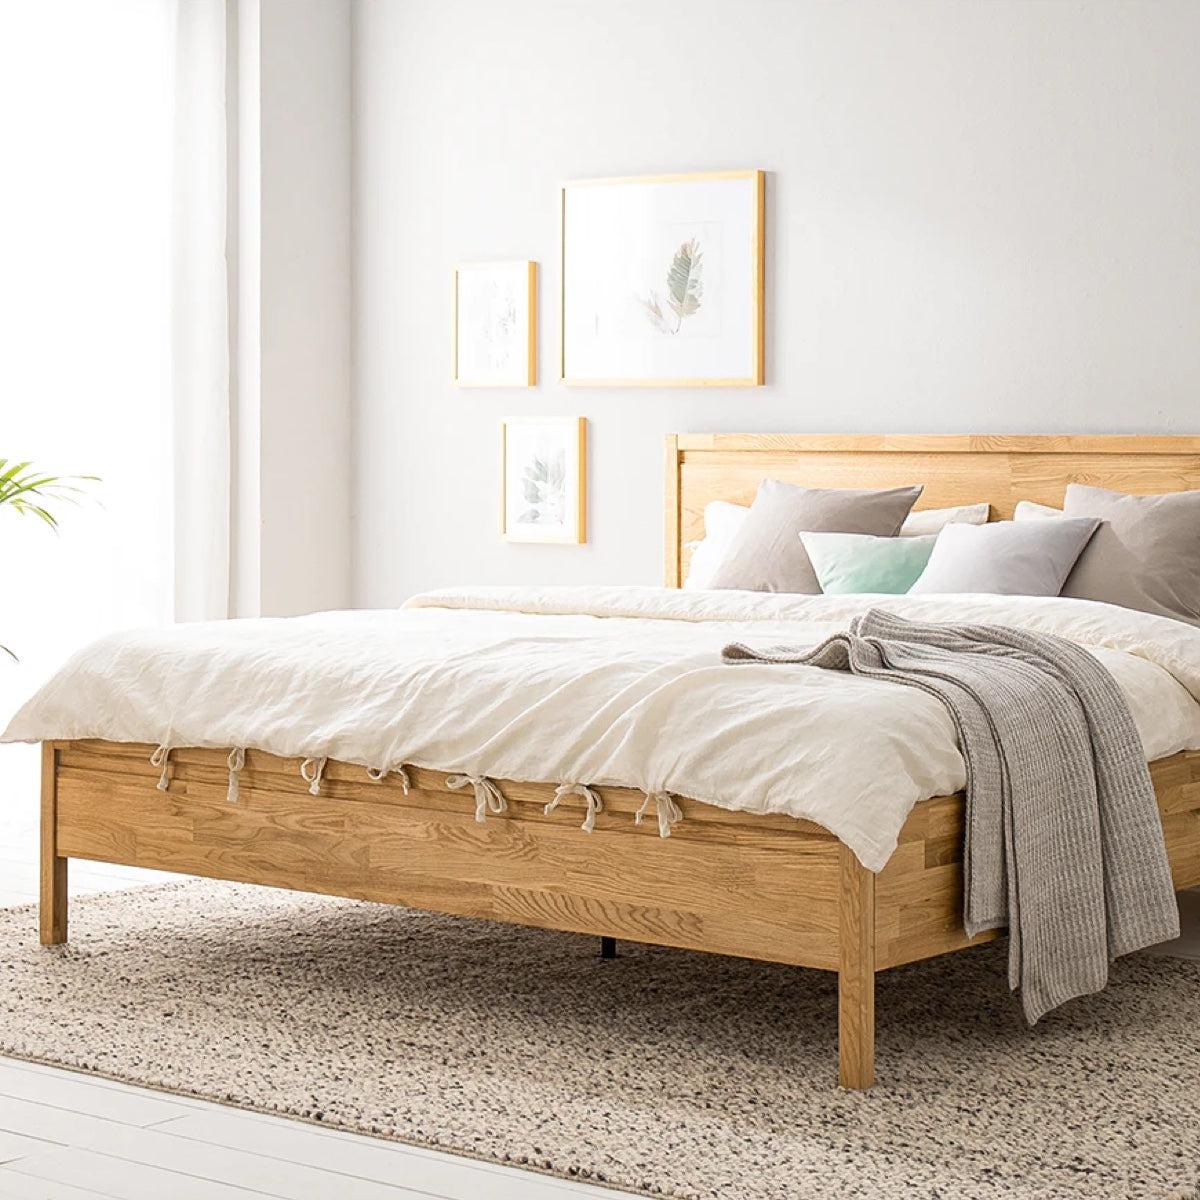 Wooden Bed Toronto